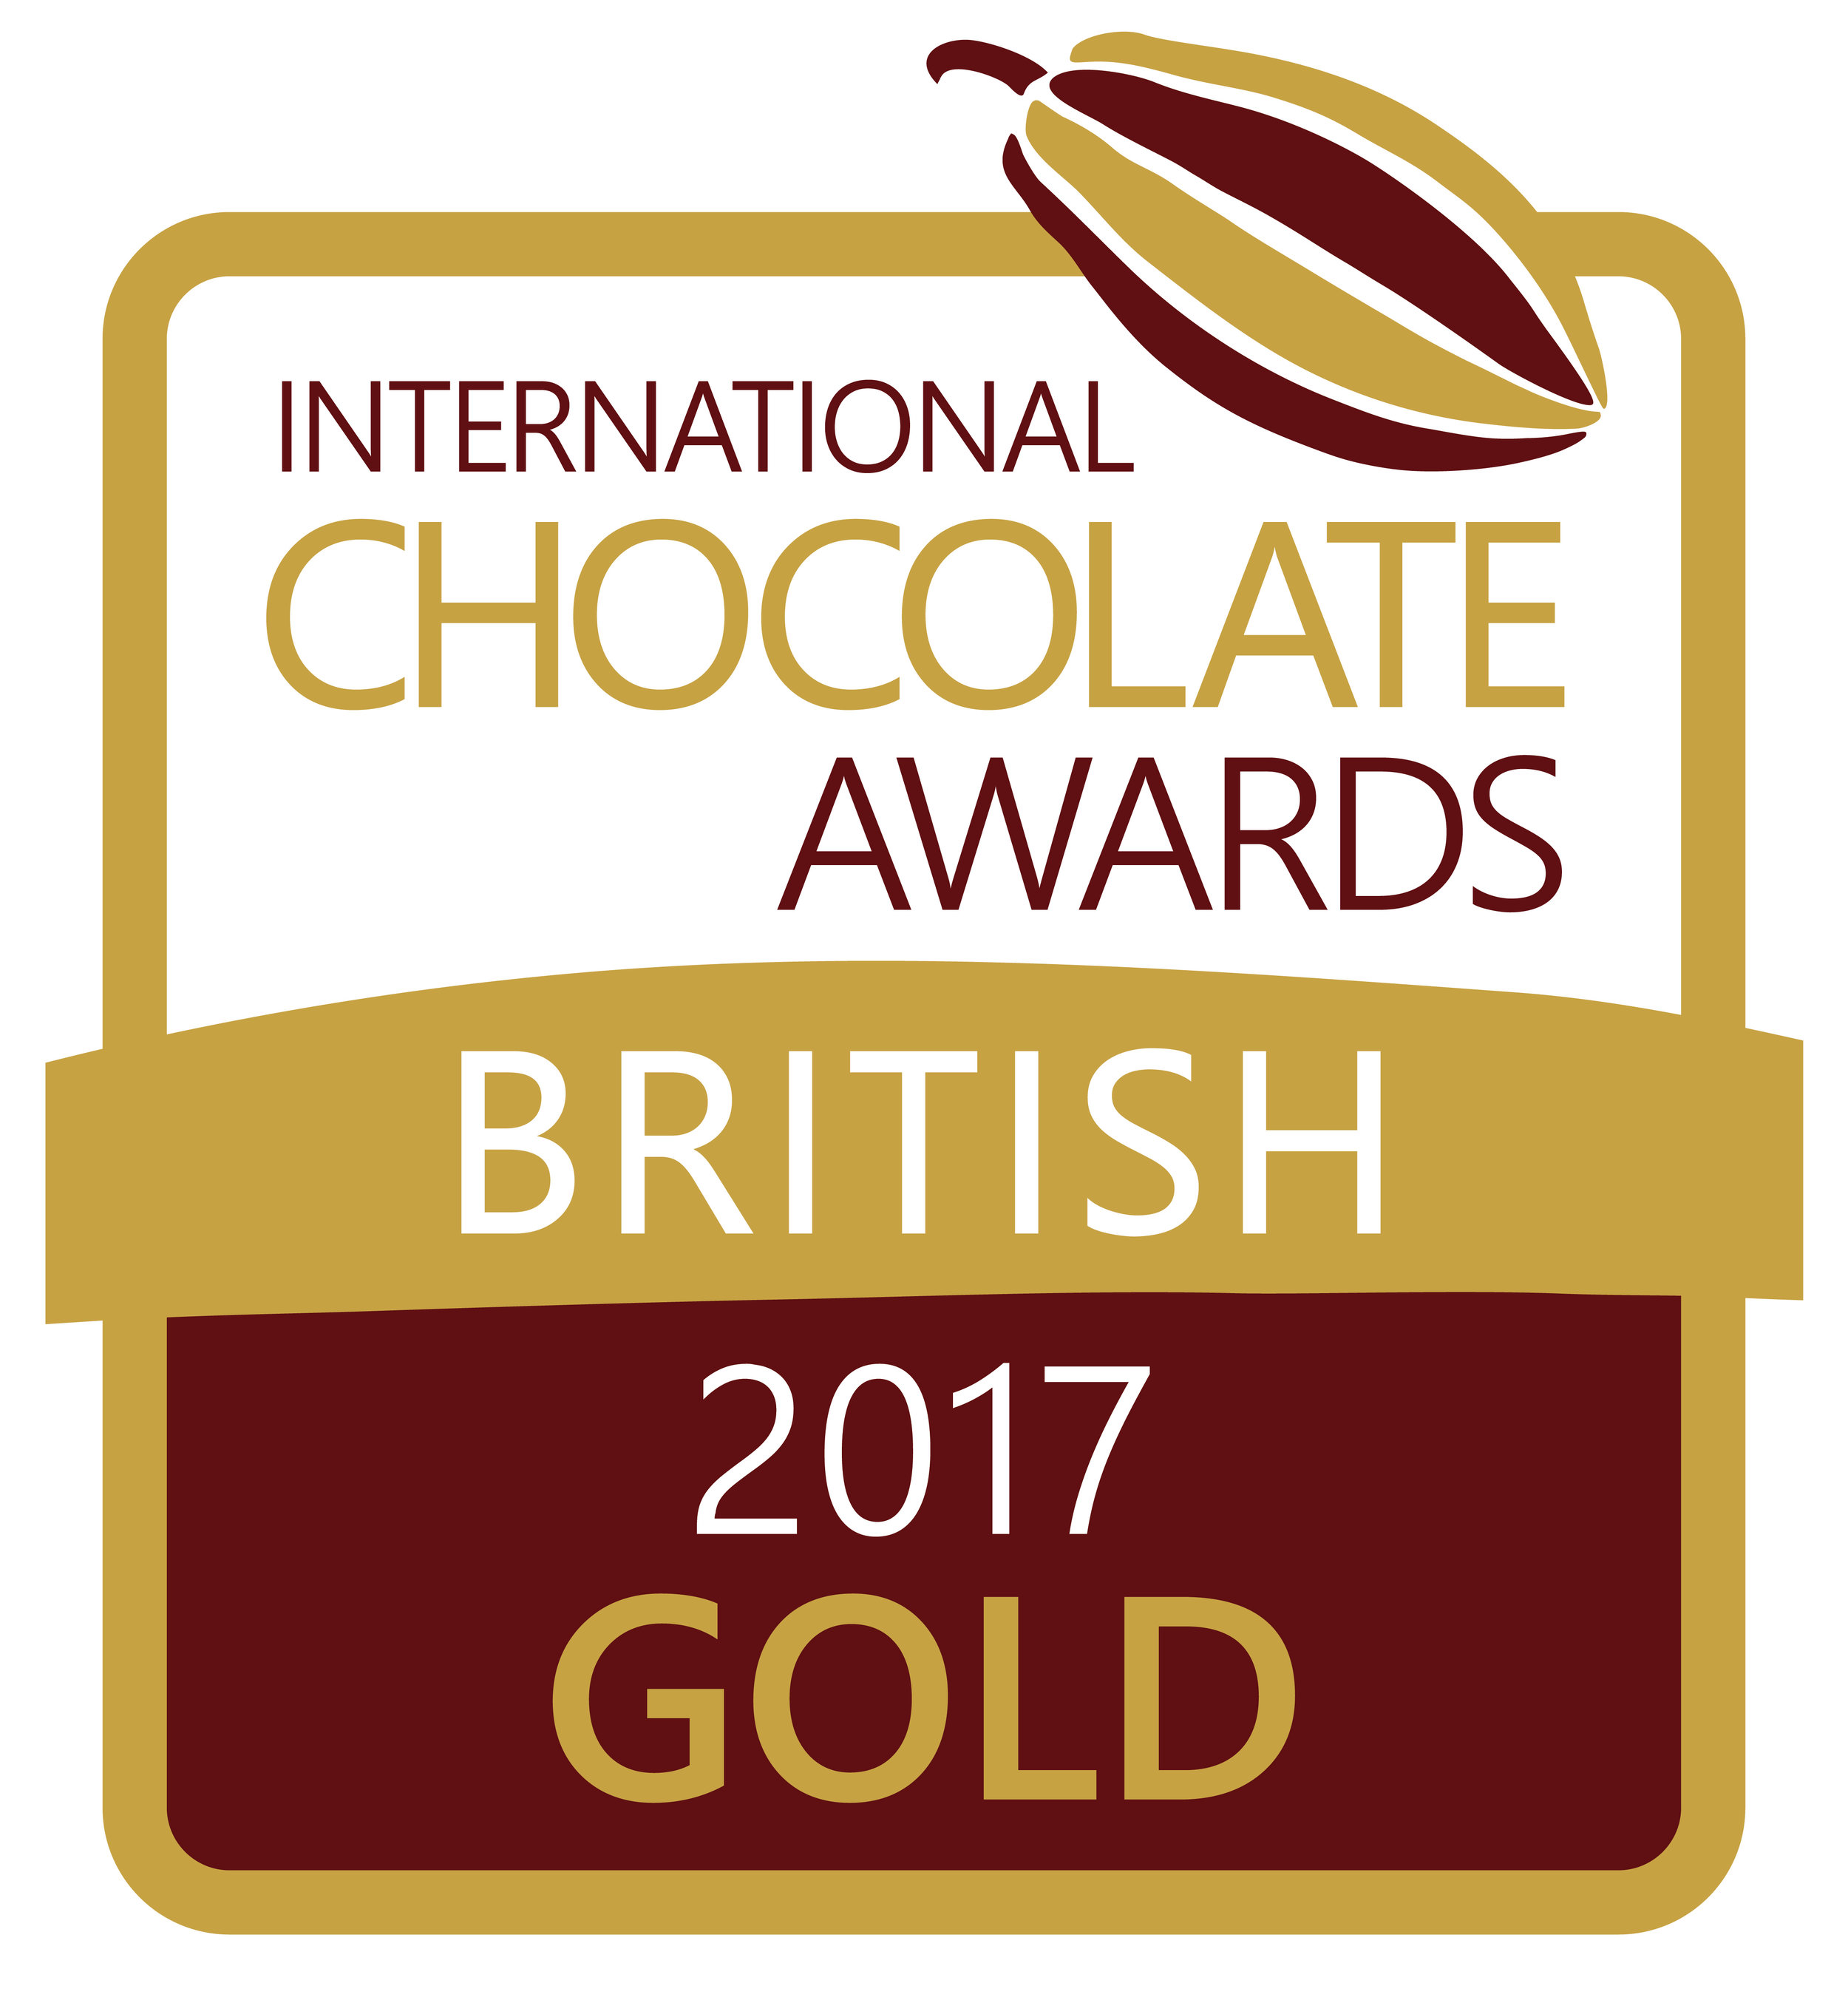 ica-prize-logo-2017-gold-british-rgb.jpg